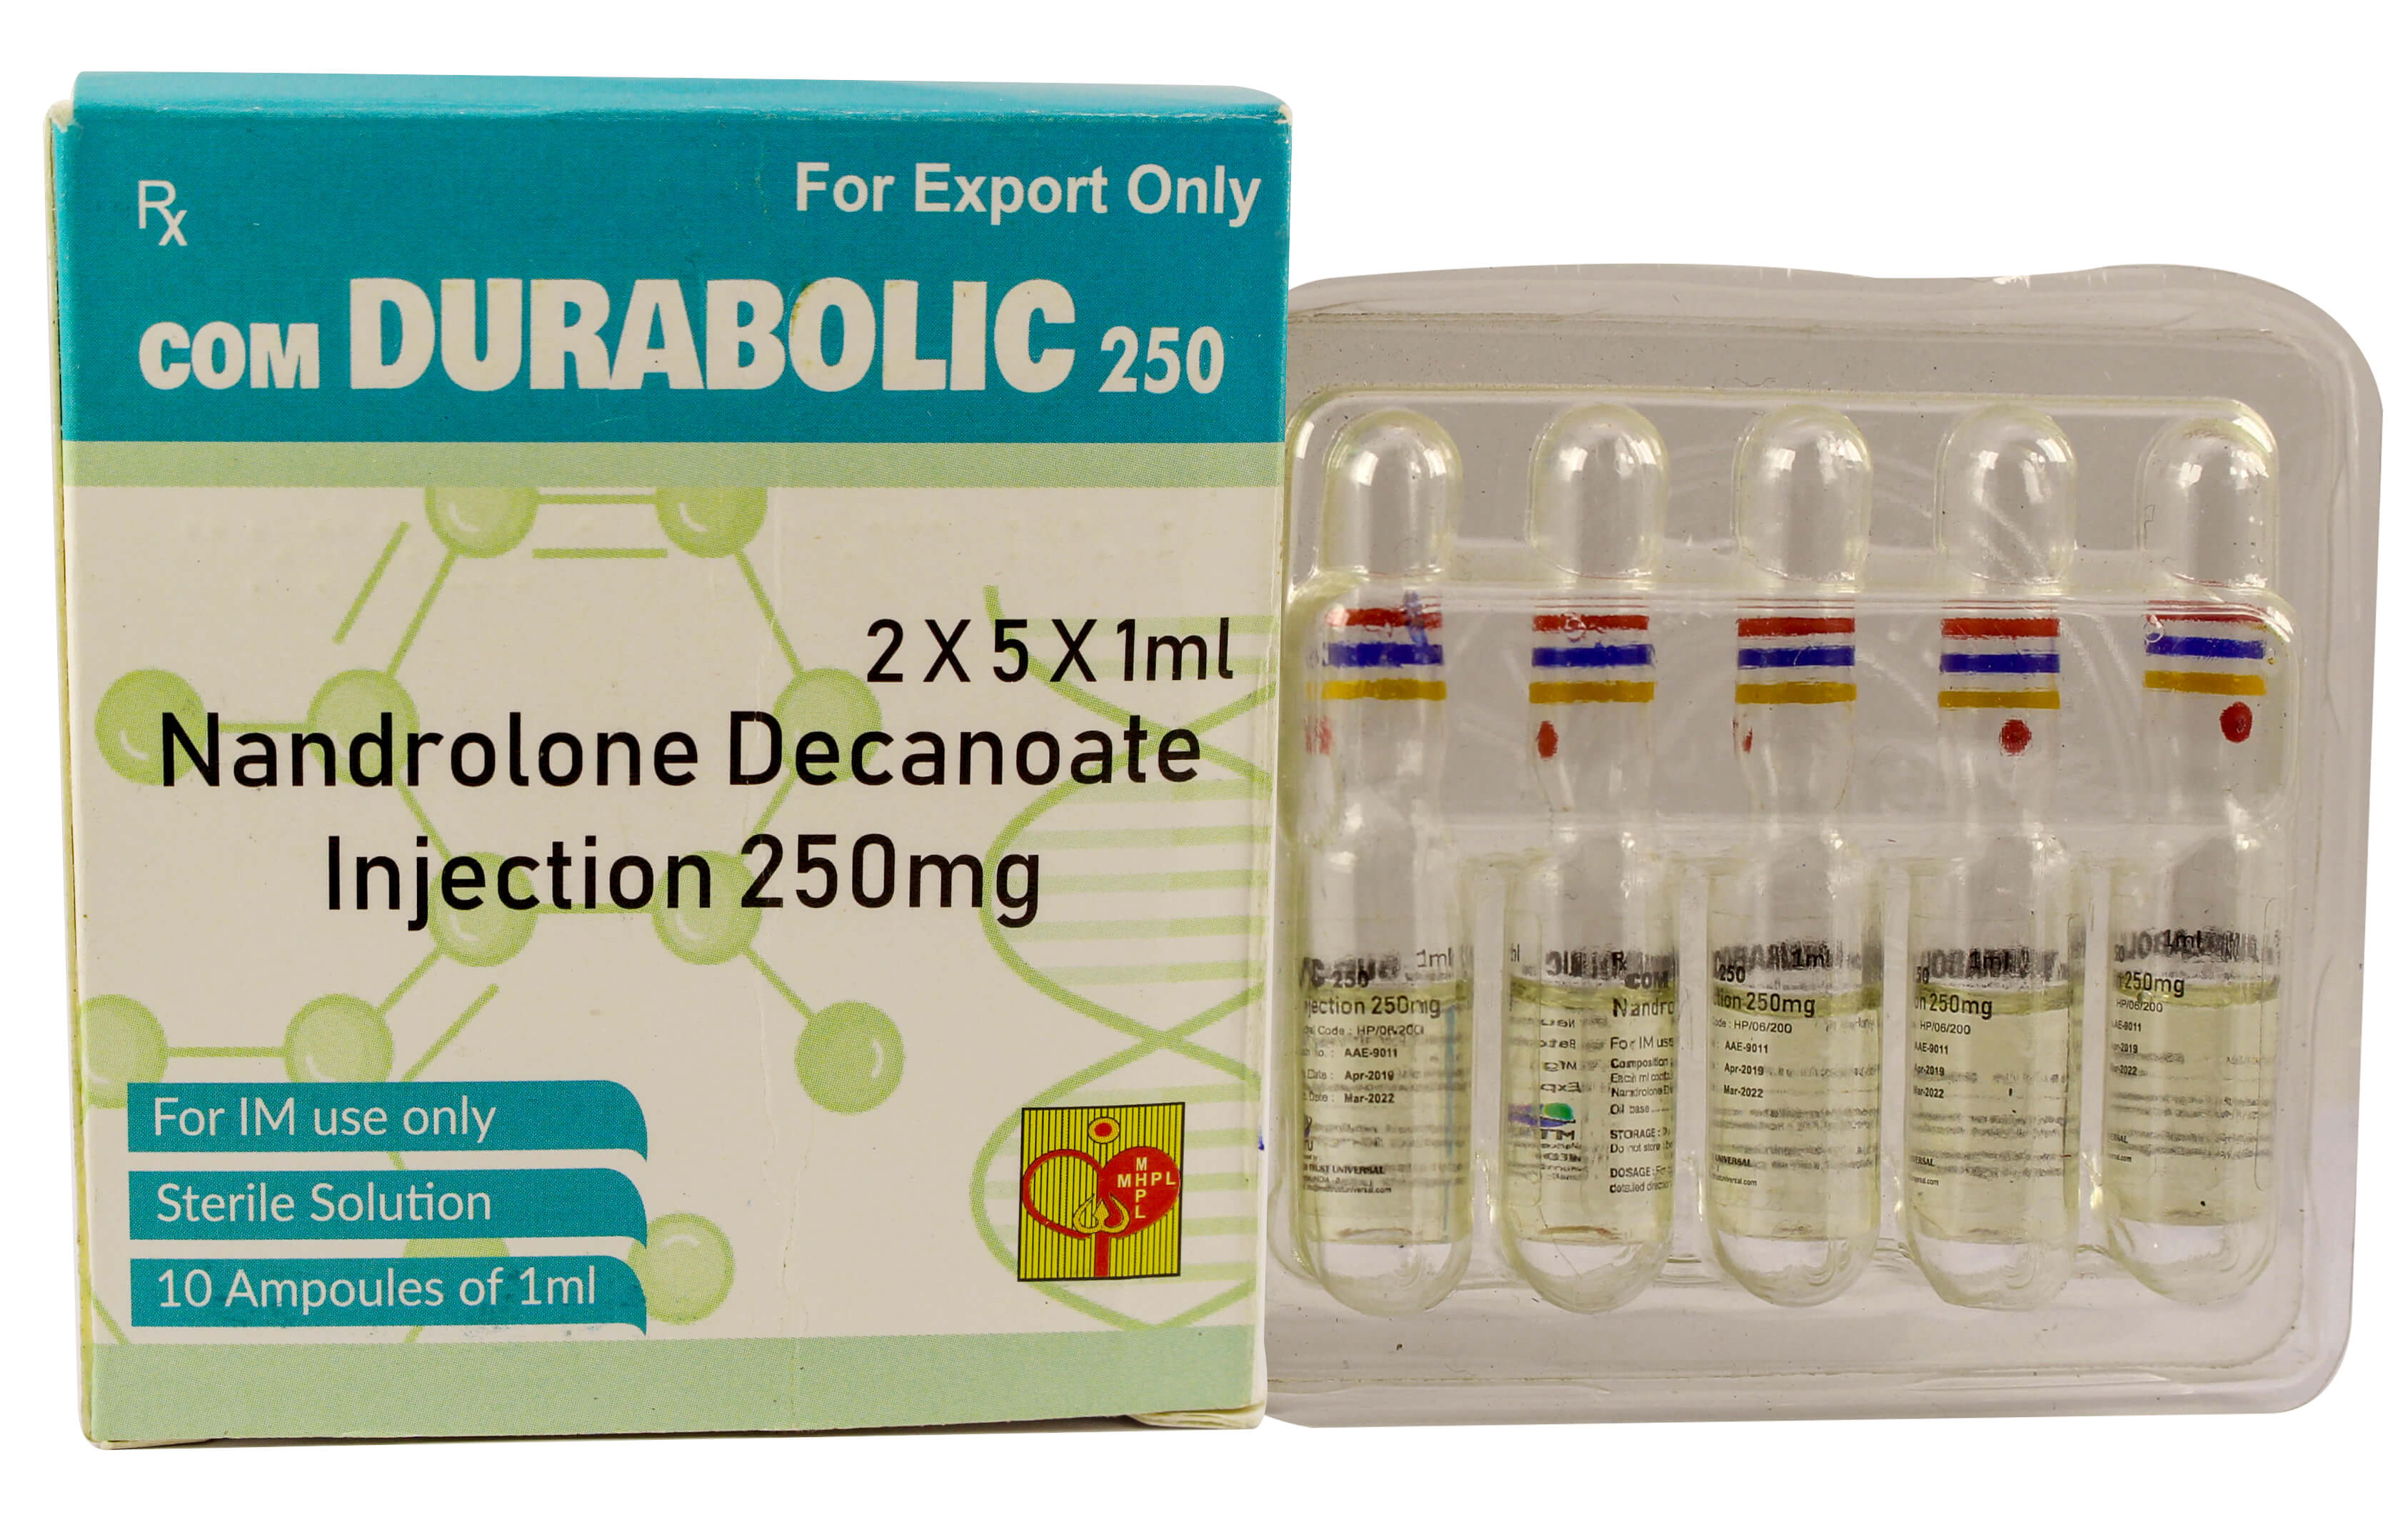 Com-Durabolic-250mg-injection